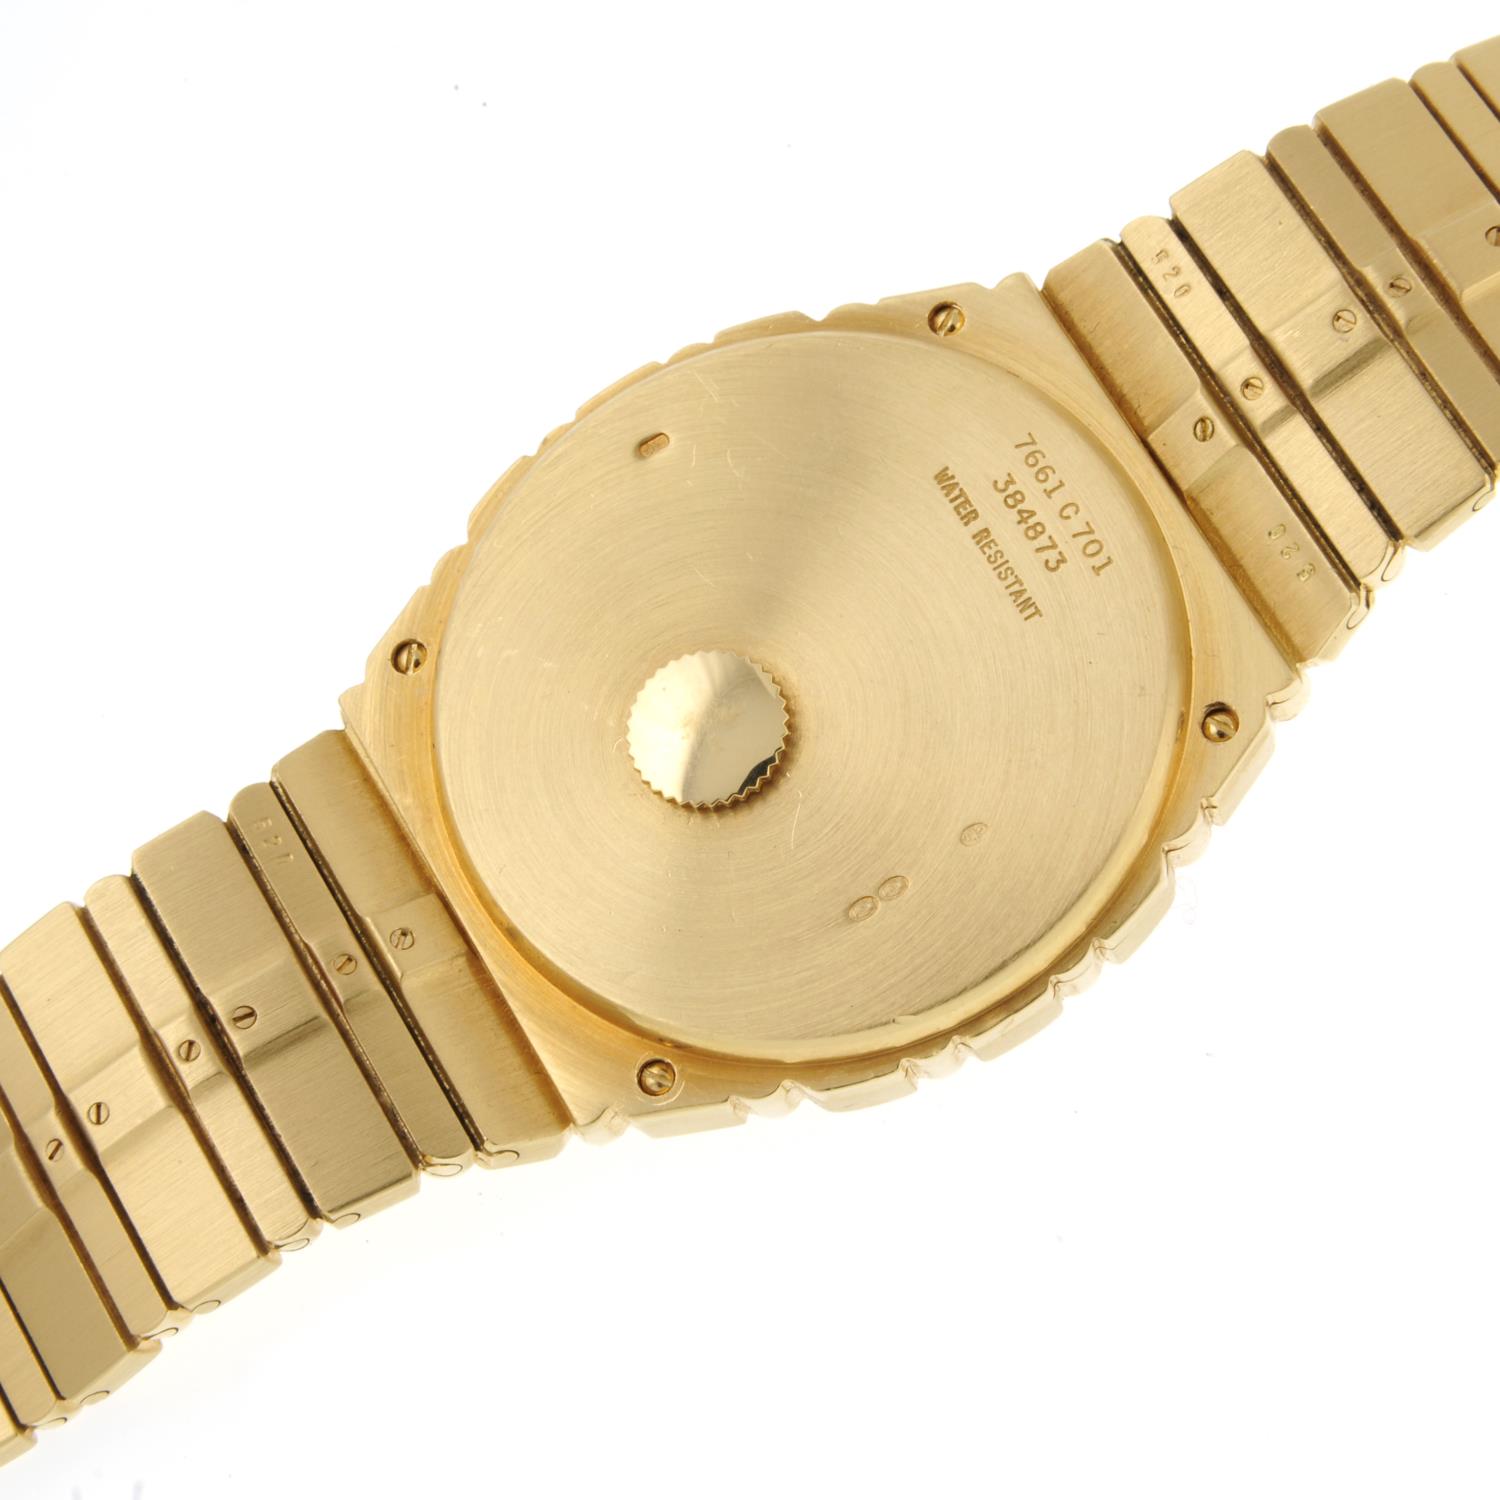 PIAGET - a gentleman's Polo bracelet watch. - Image 4 of 4